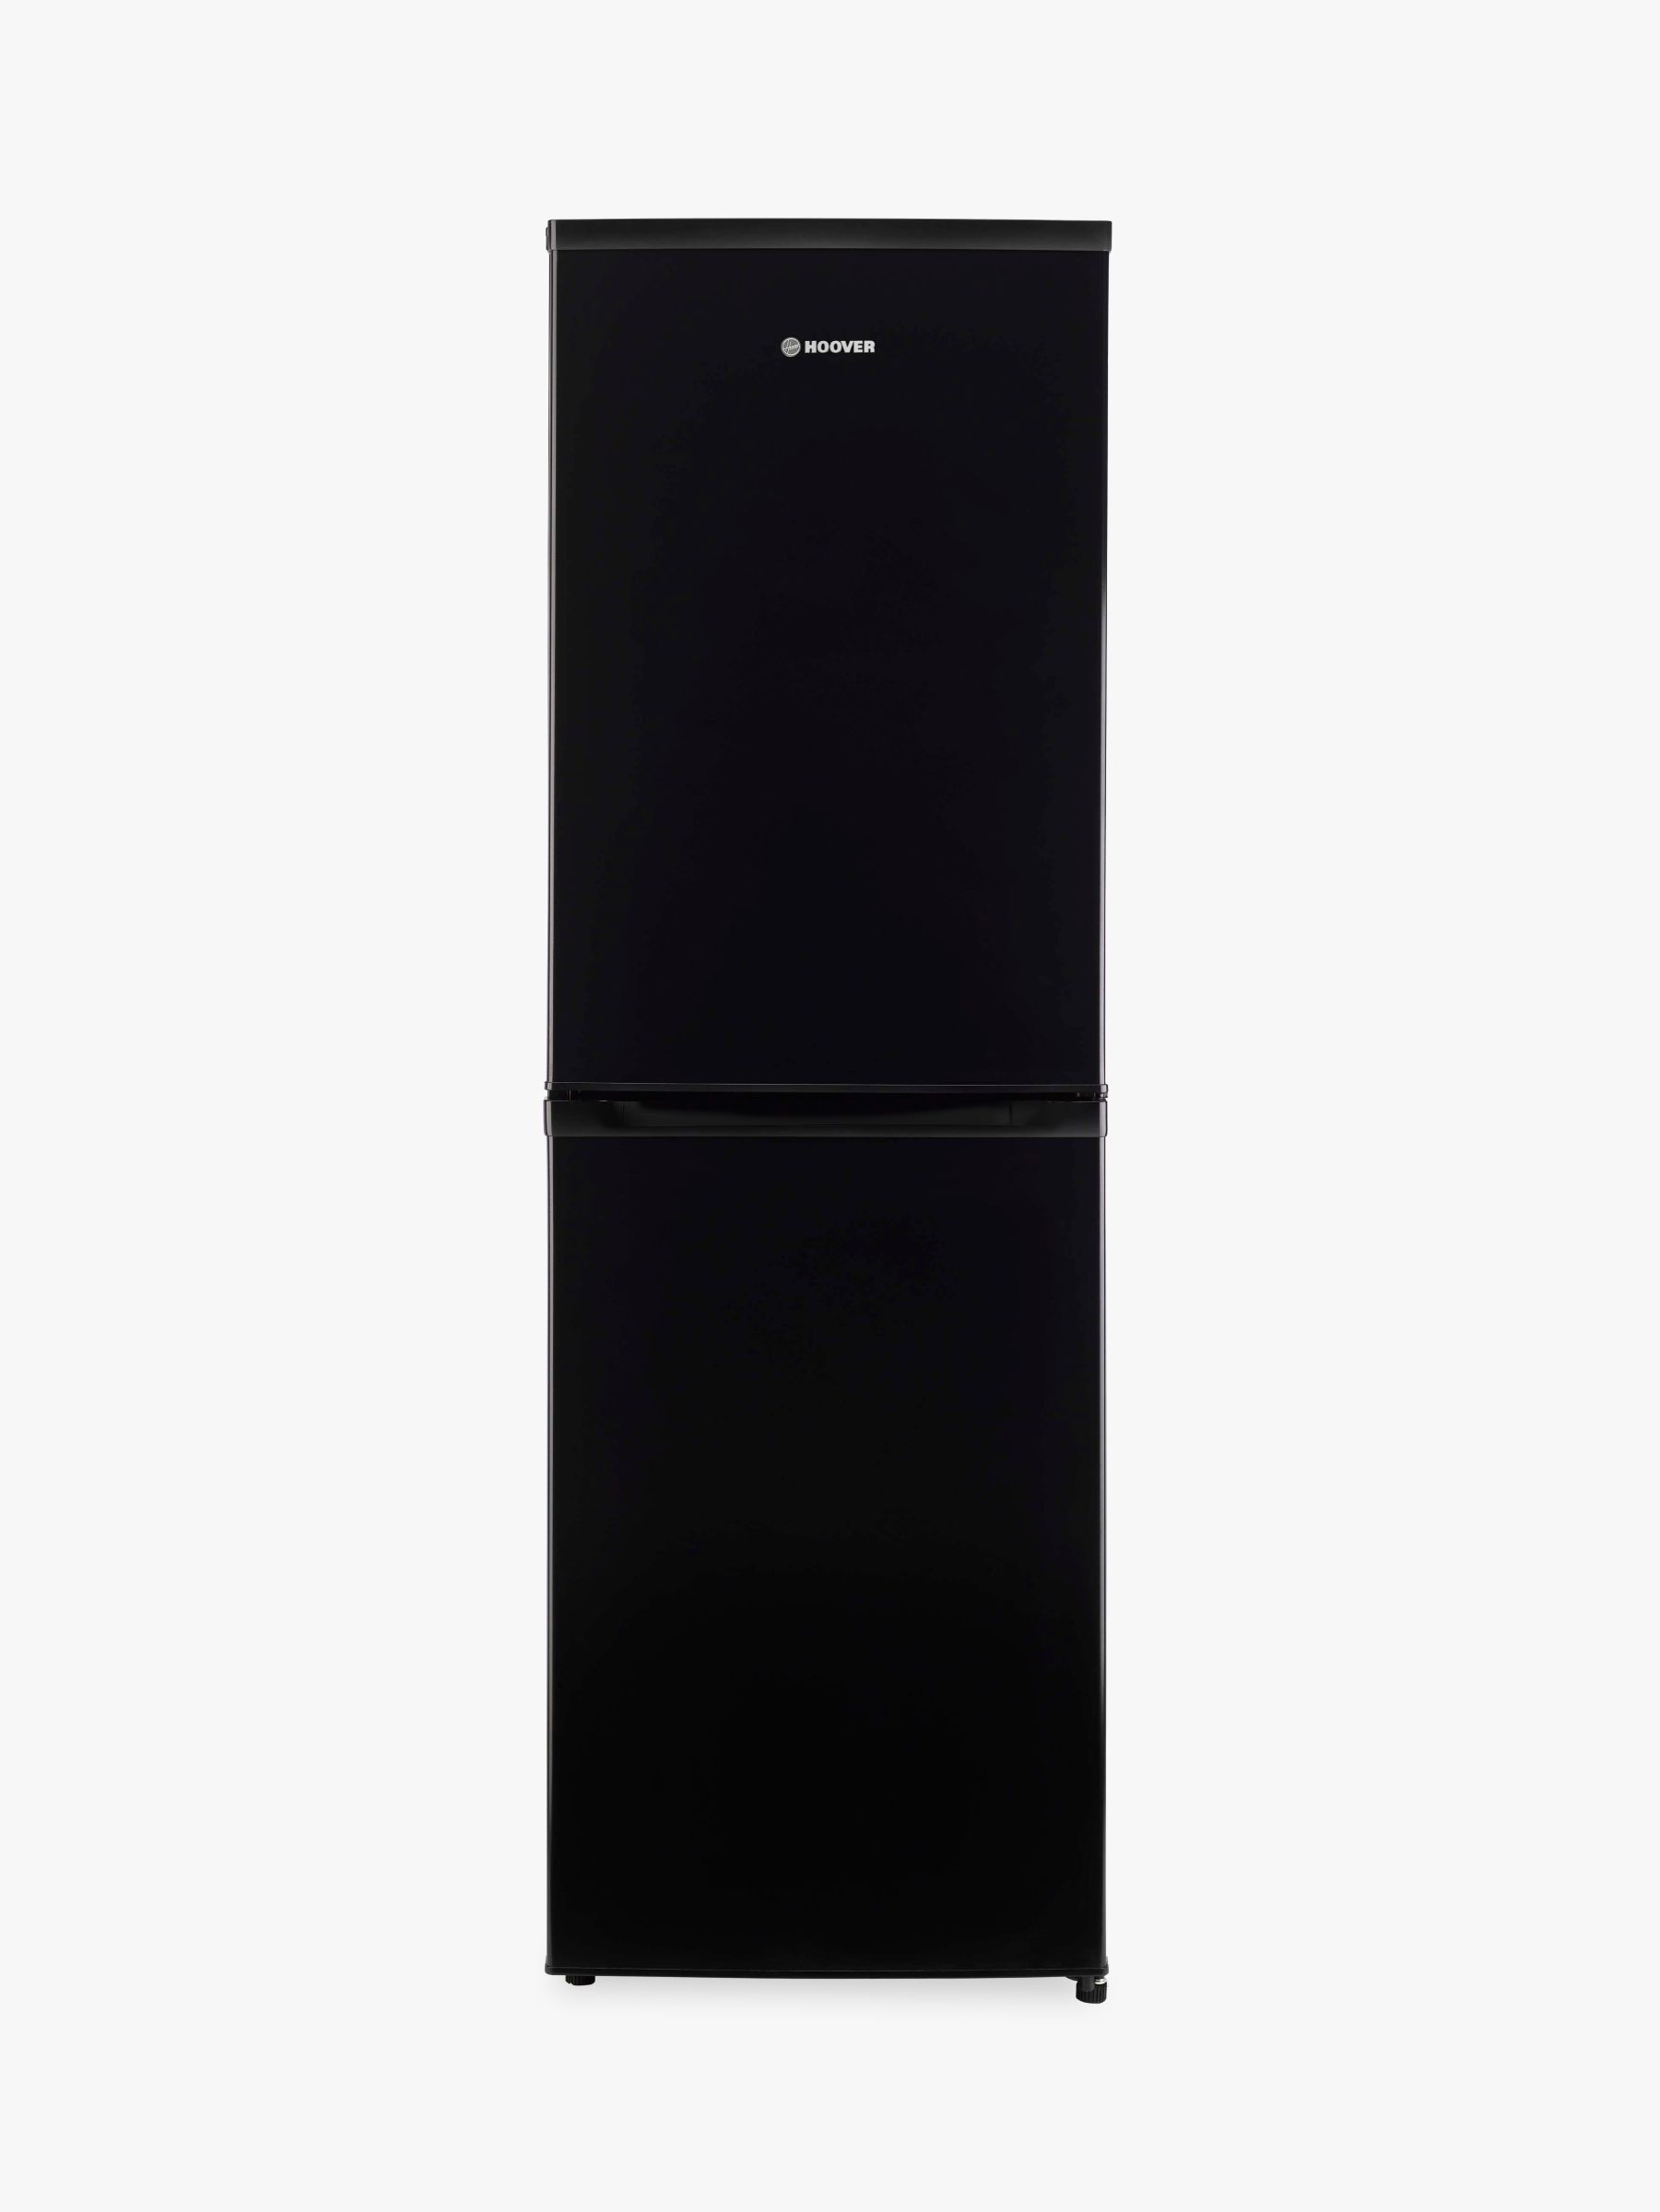 Hoover HVBF 5182BK Freestanding Fridge Freezer, A+ Energy Rating, 55cm Wide, Black